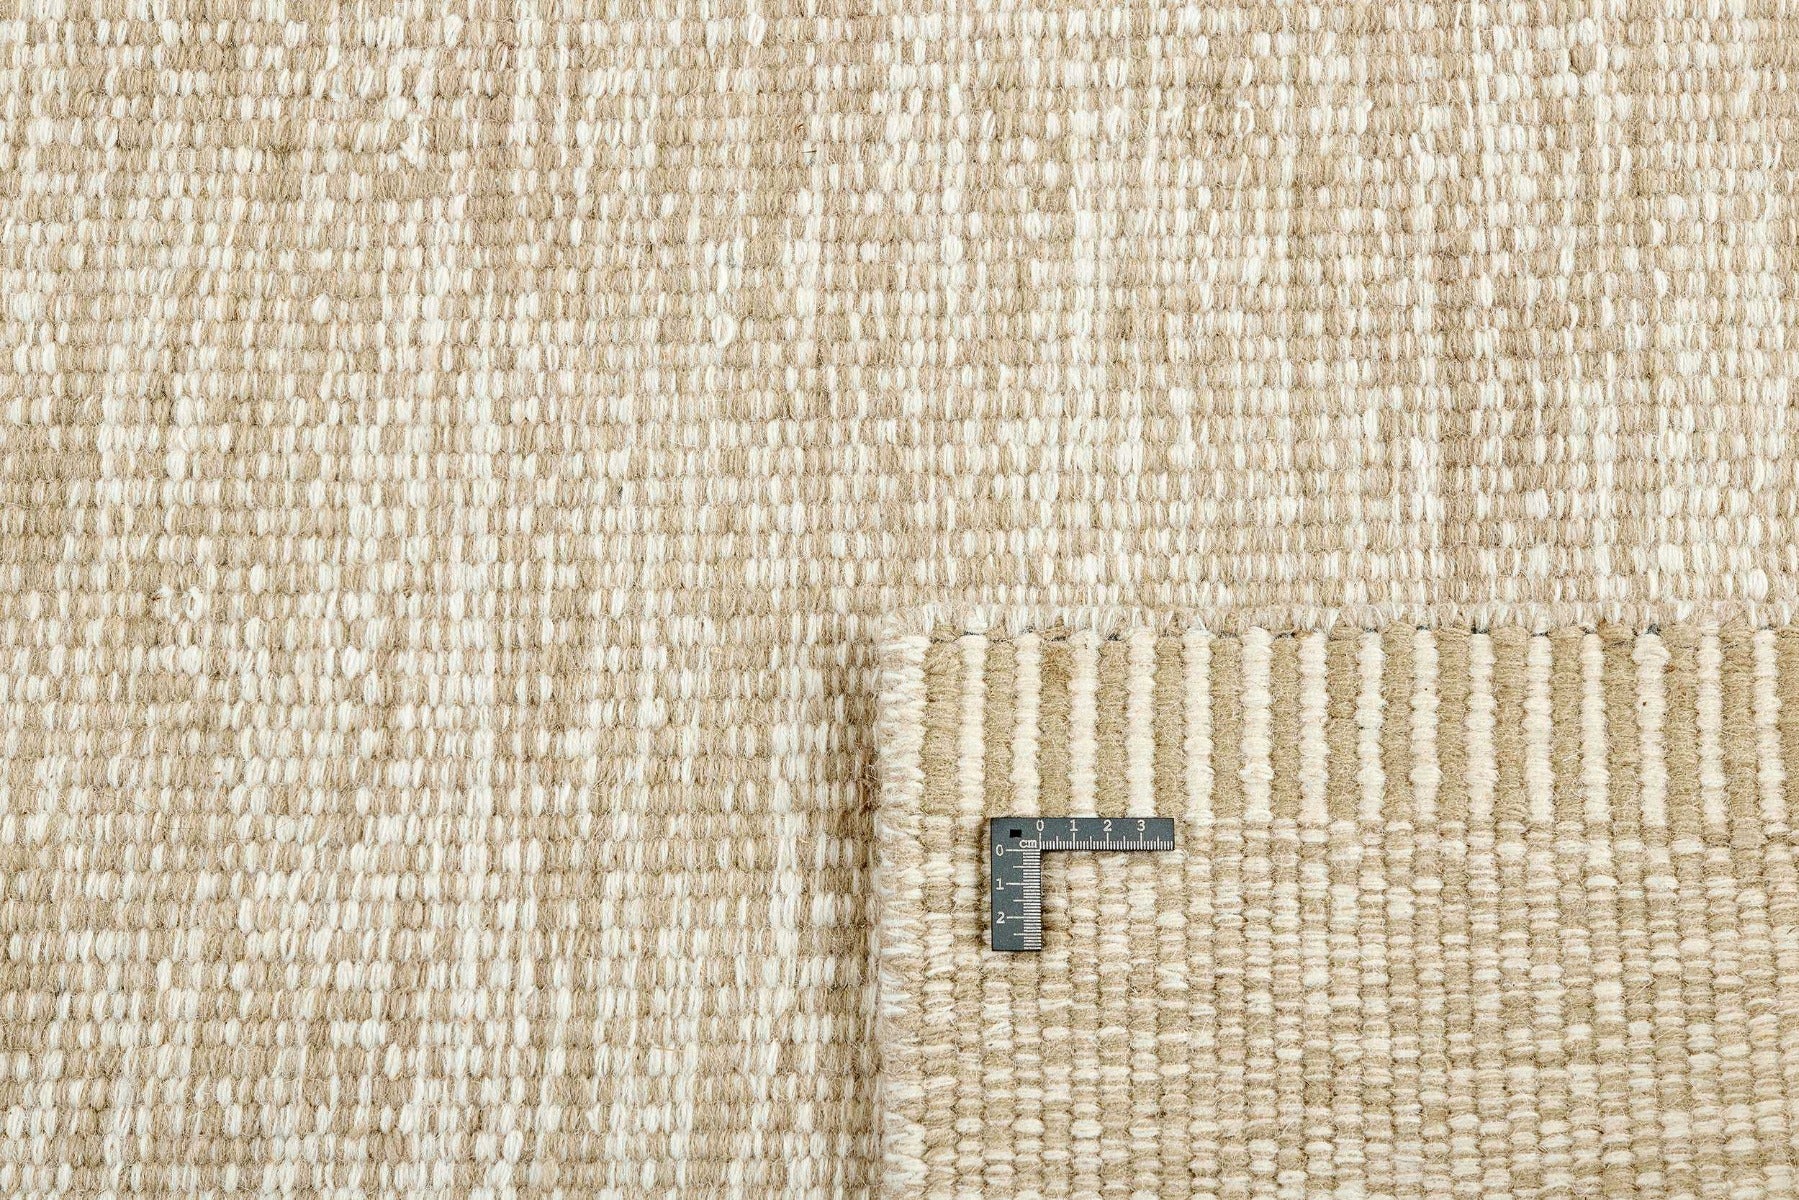 plain beige flatweave area rug
